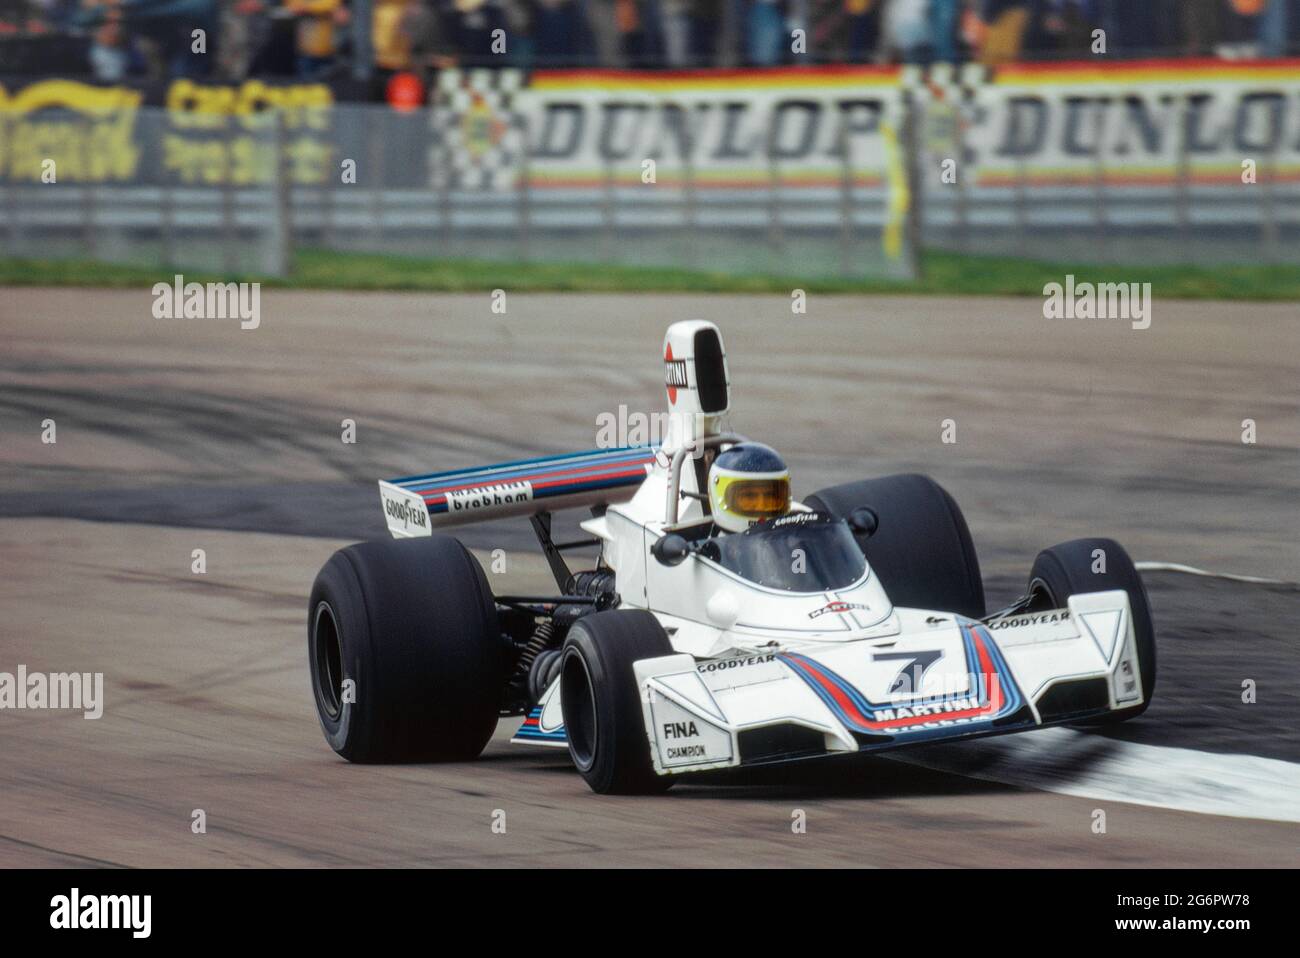 07 REUTEMANN Carlos (ARG), Martini Racing, Brabham BT44B Ford